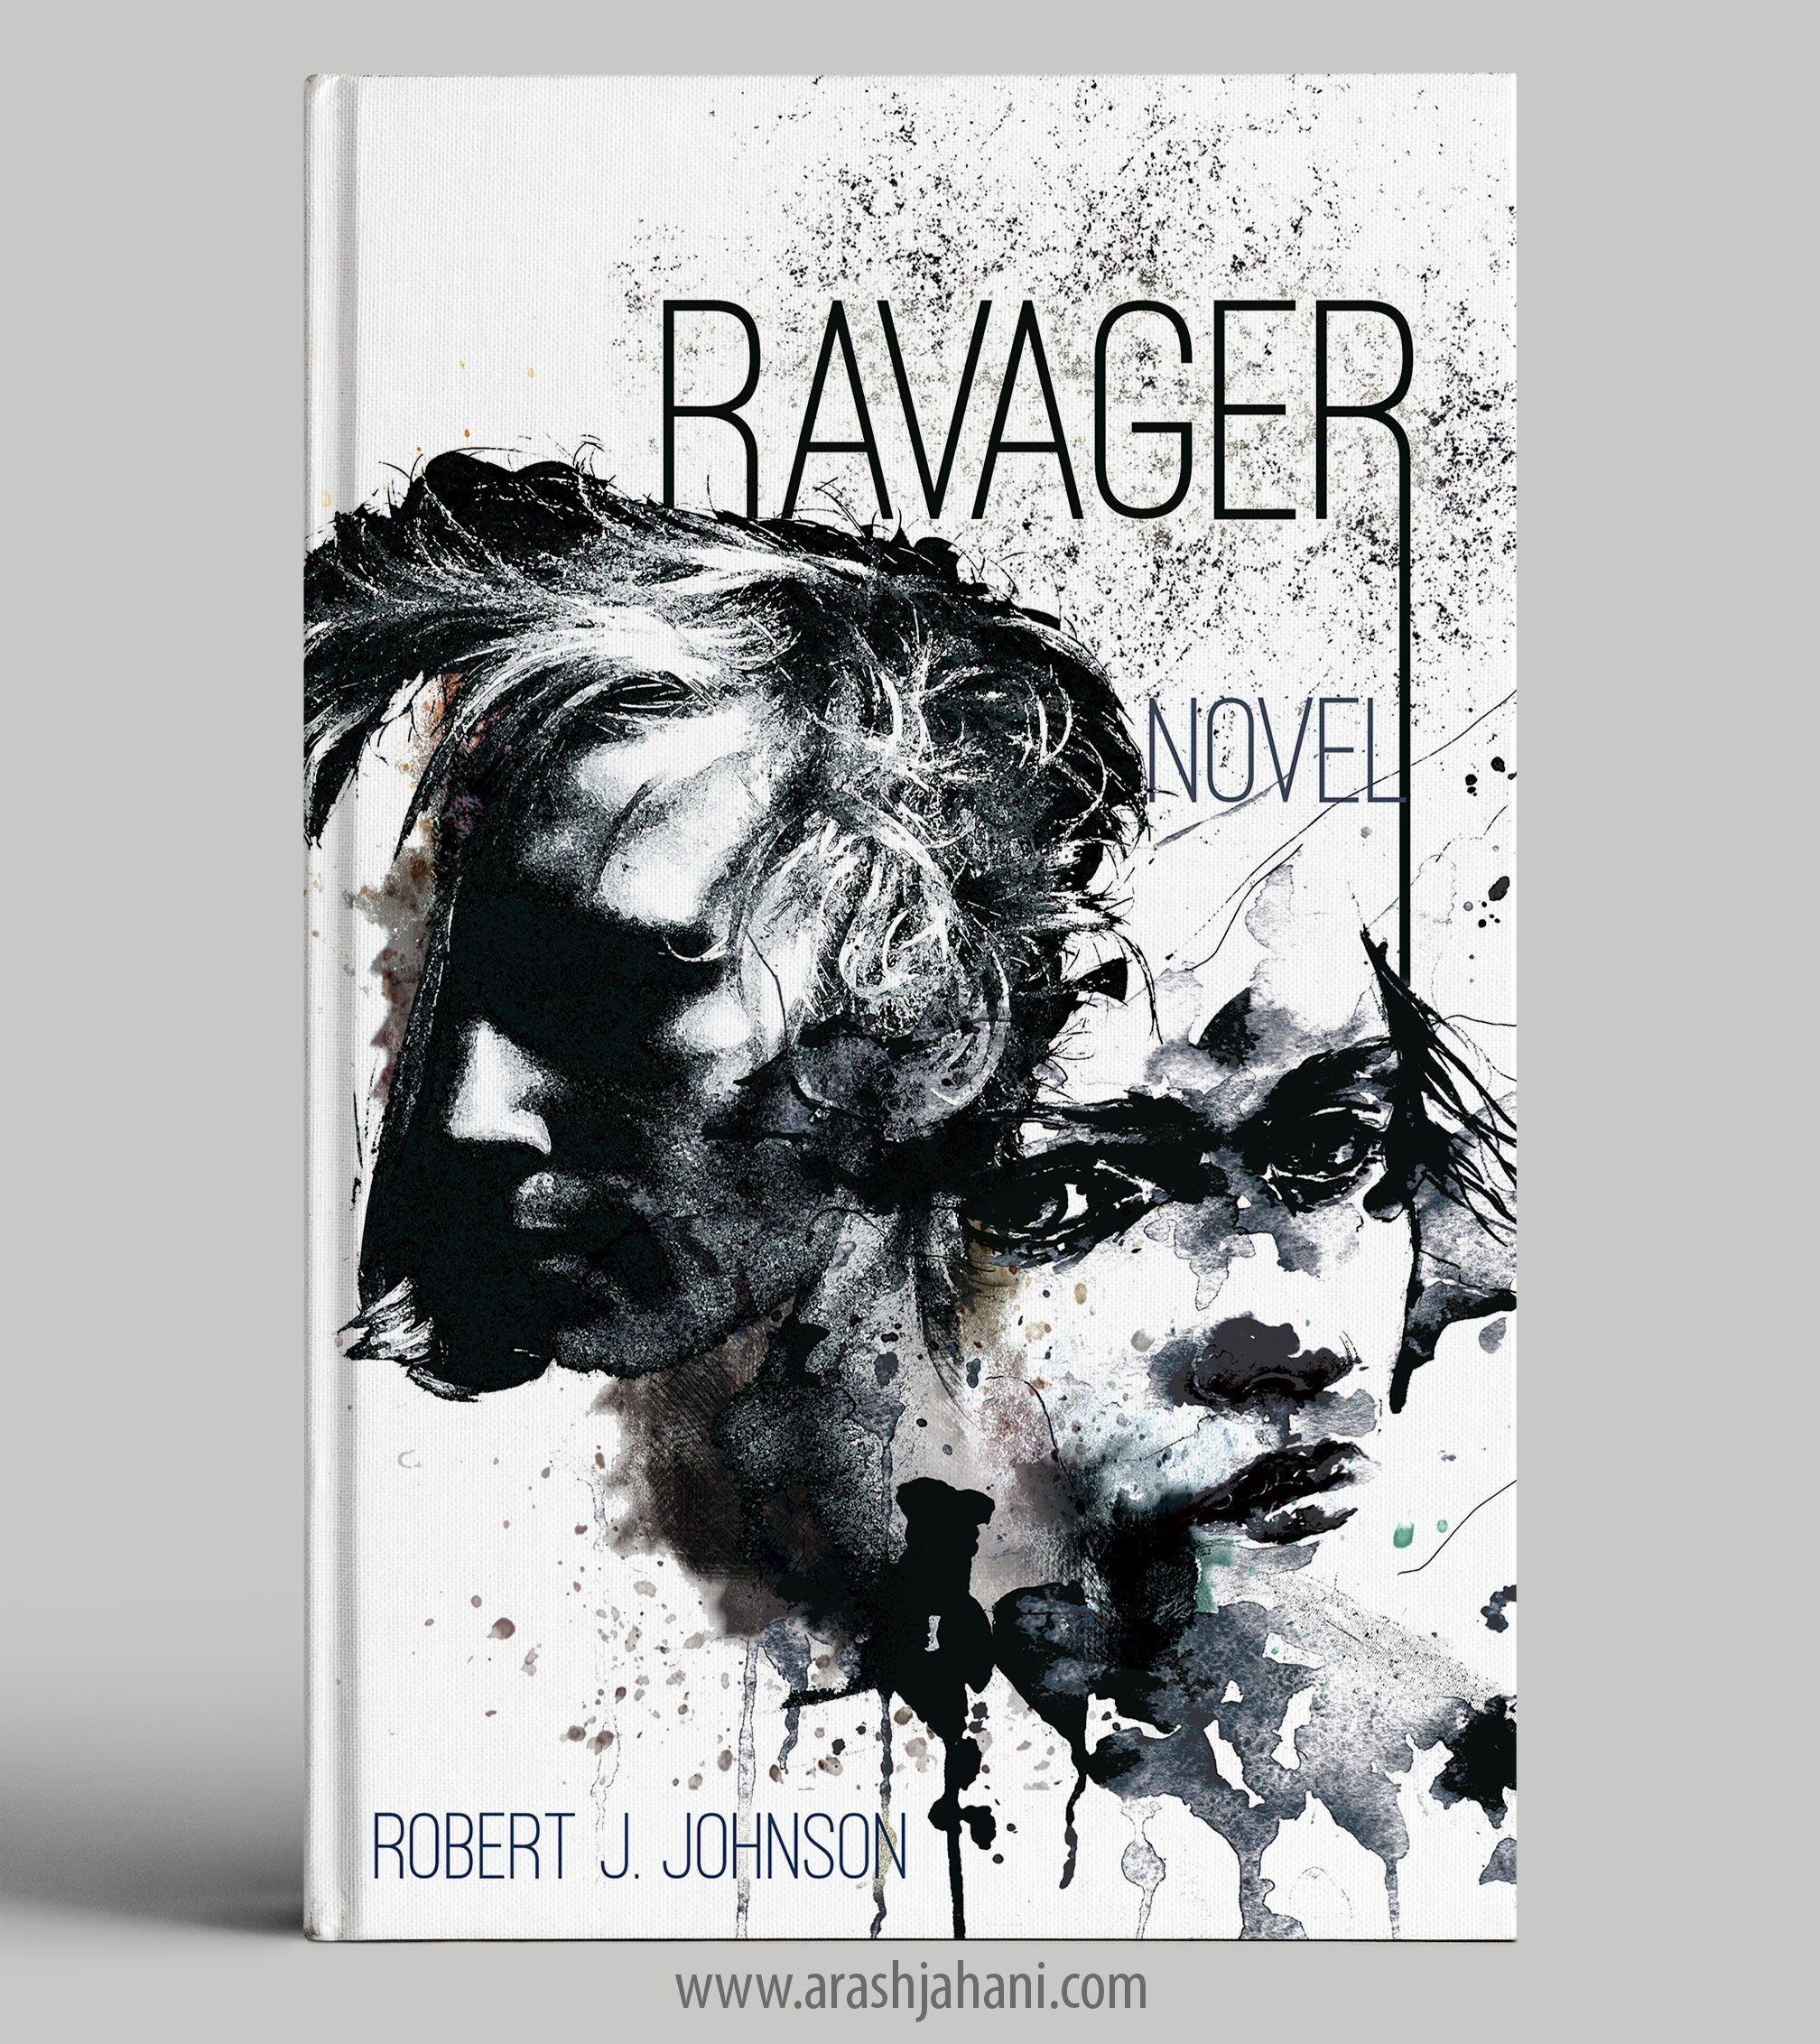 book cover designer